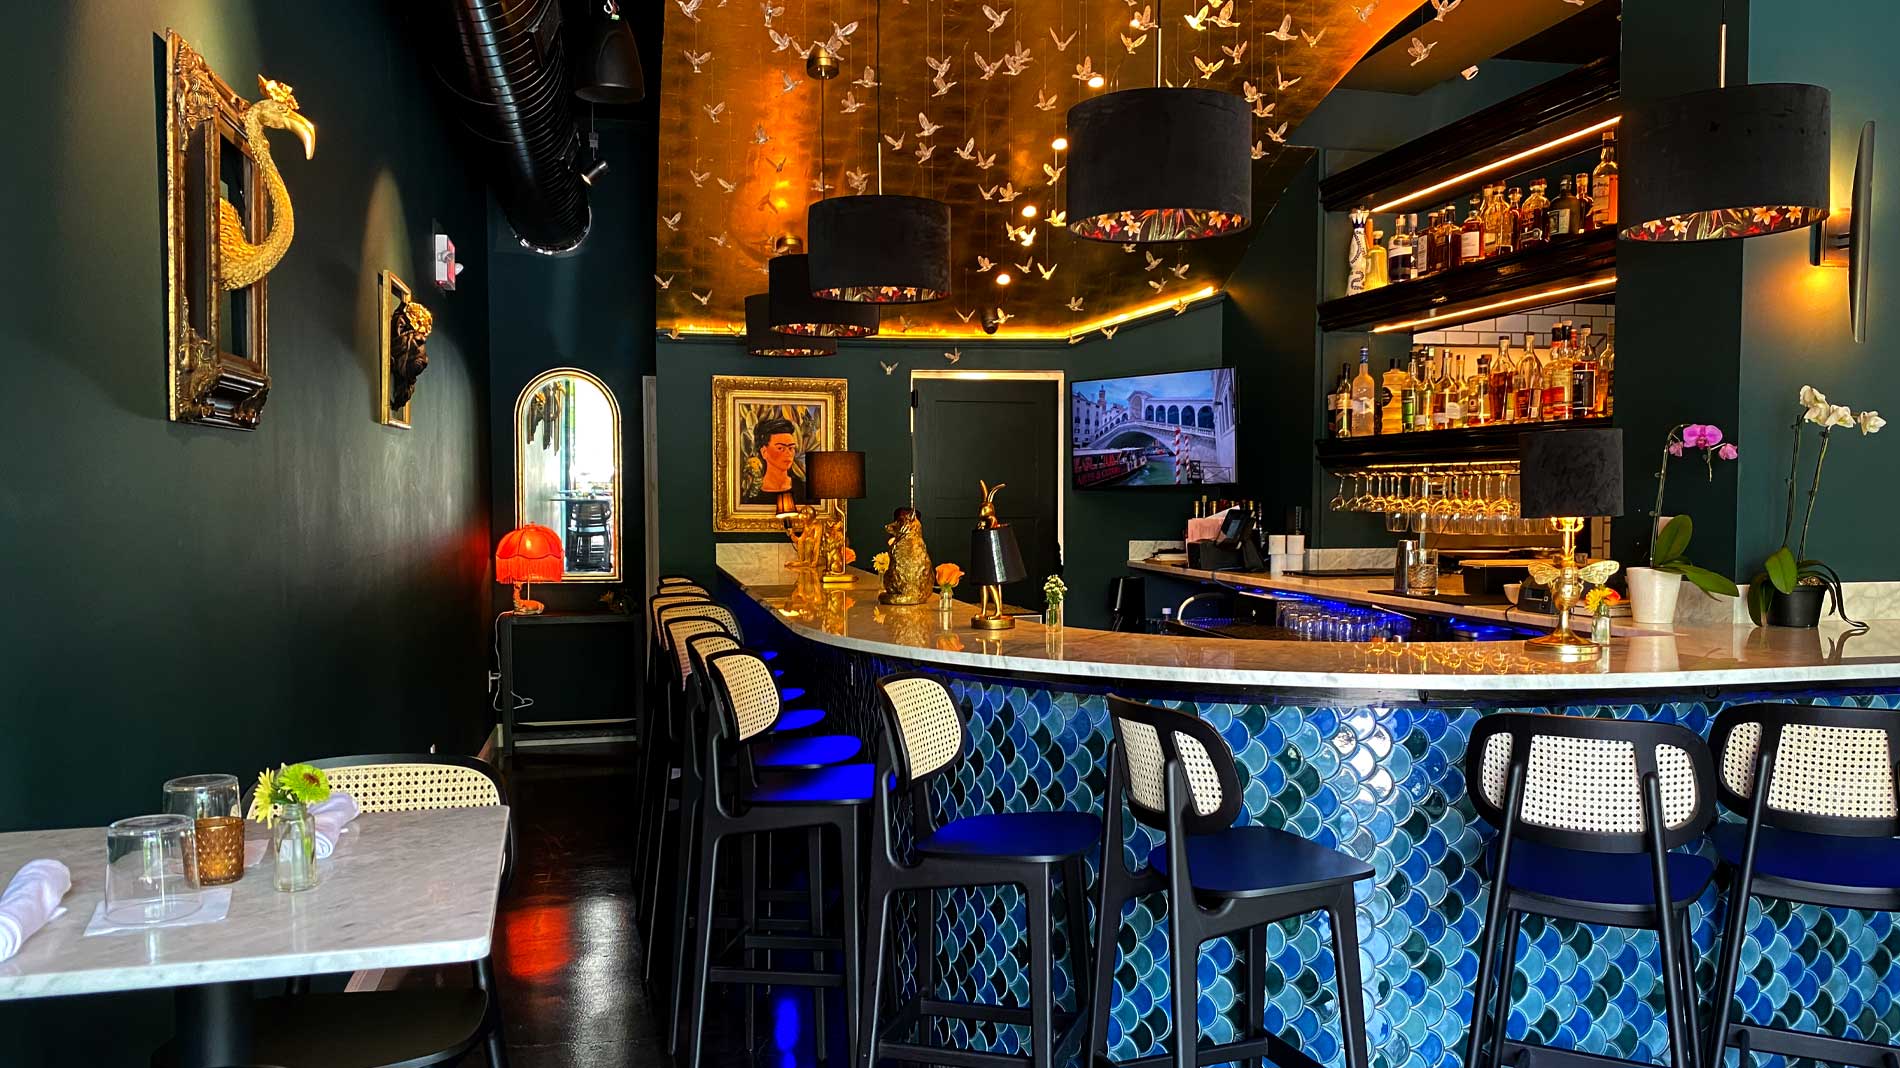 11 new St. Louis bars we love